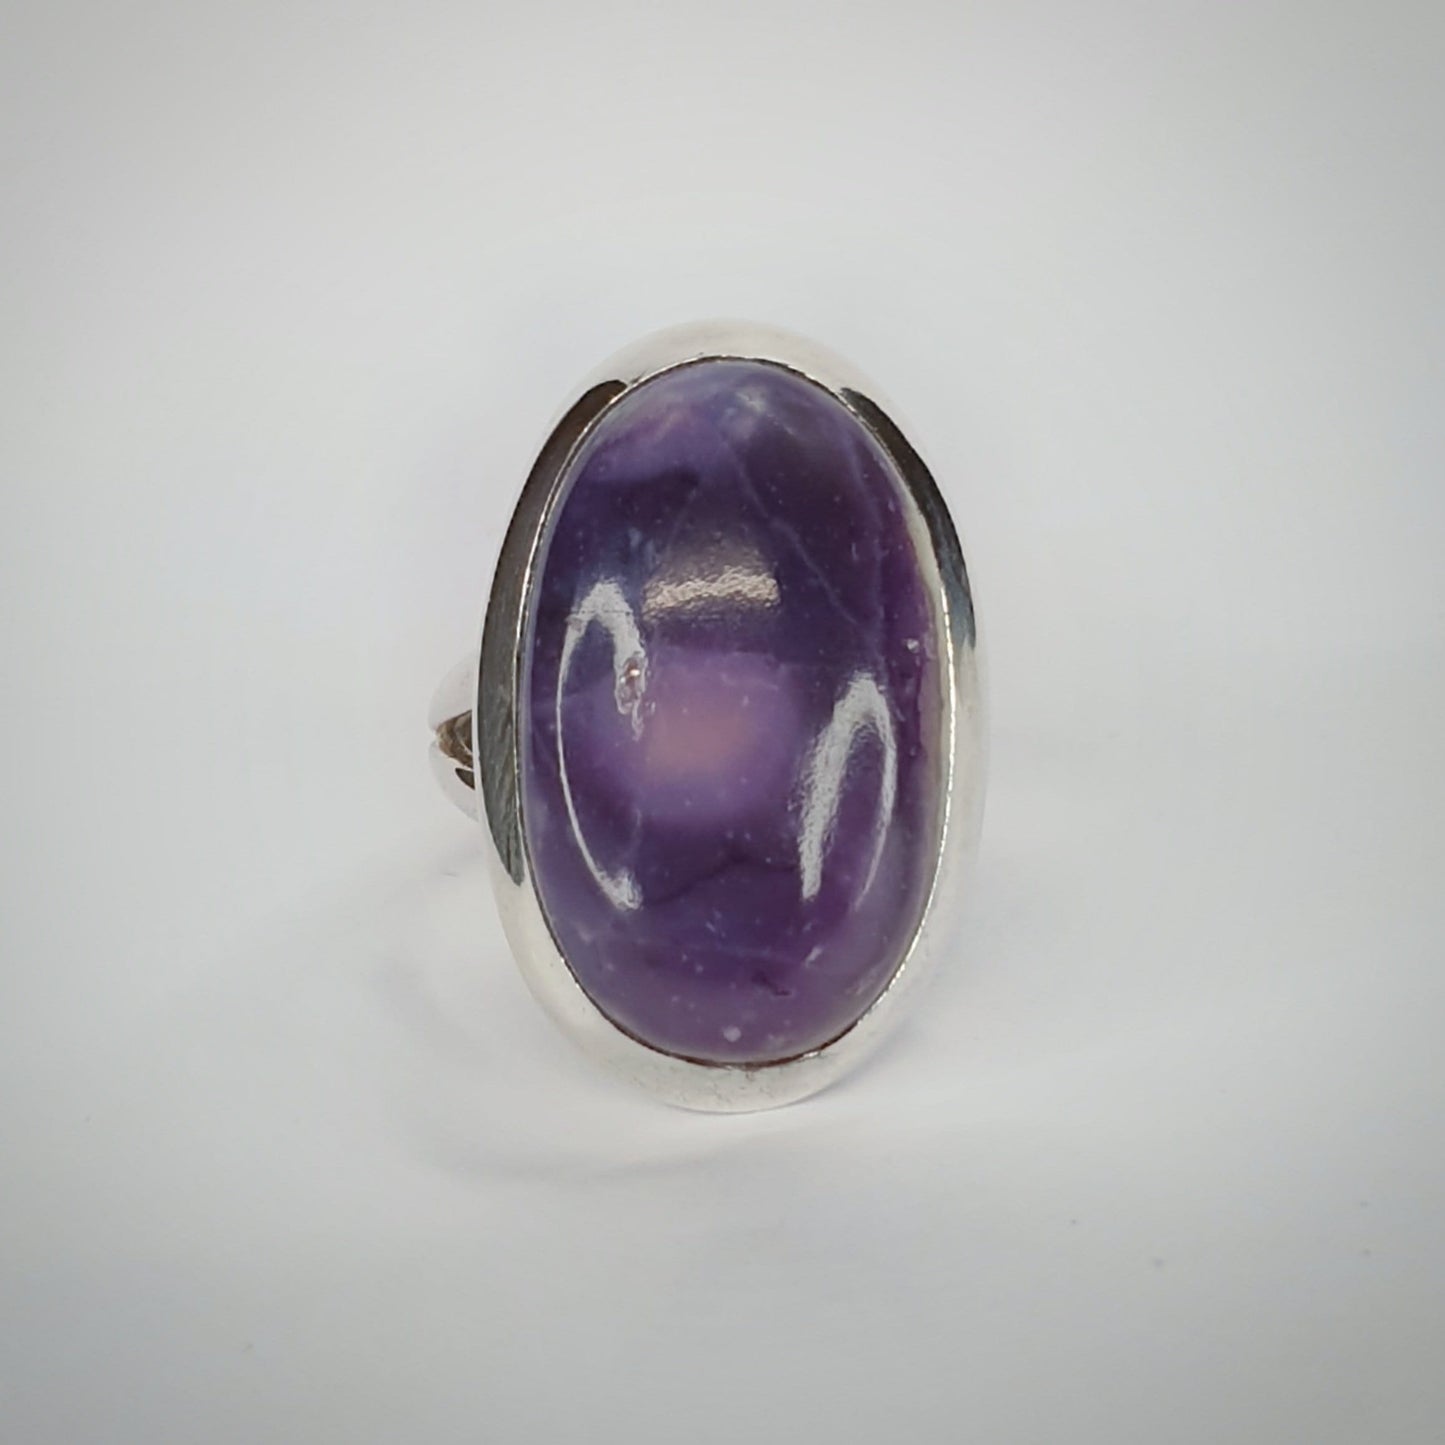 Tiffany Stone Ring - Size 6 - ON SALE